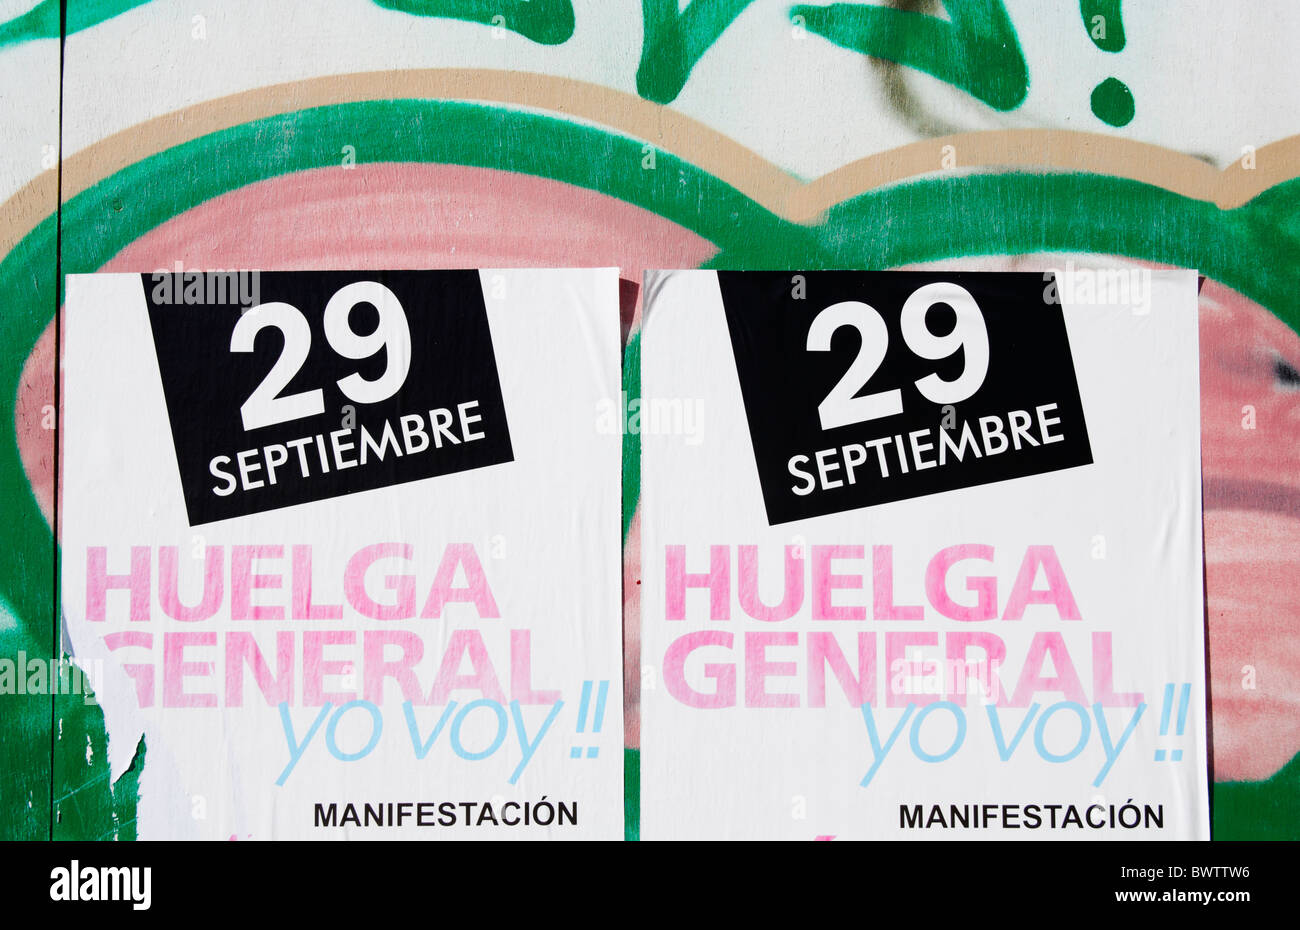 Huelga General yo voy (general strike I'm going) posters in Spain Stock Photo